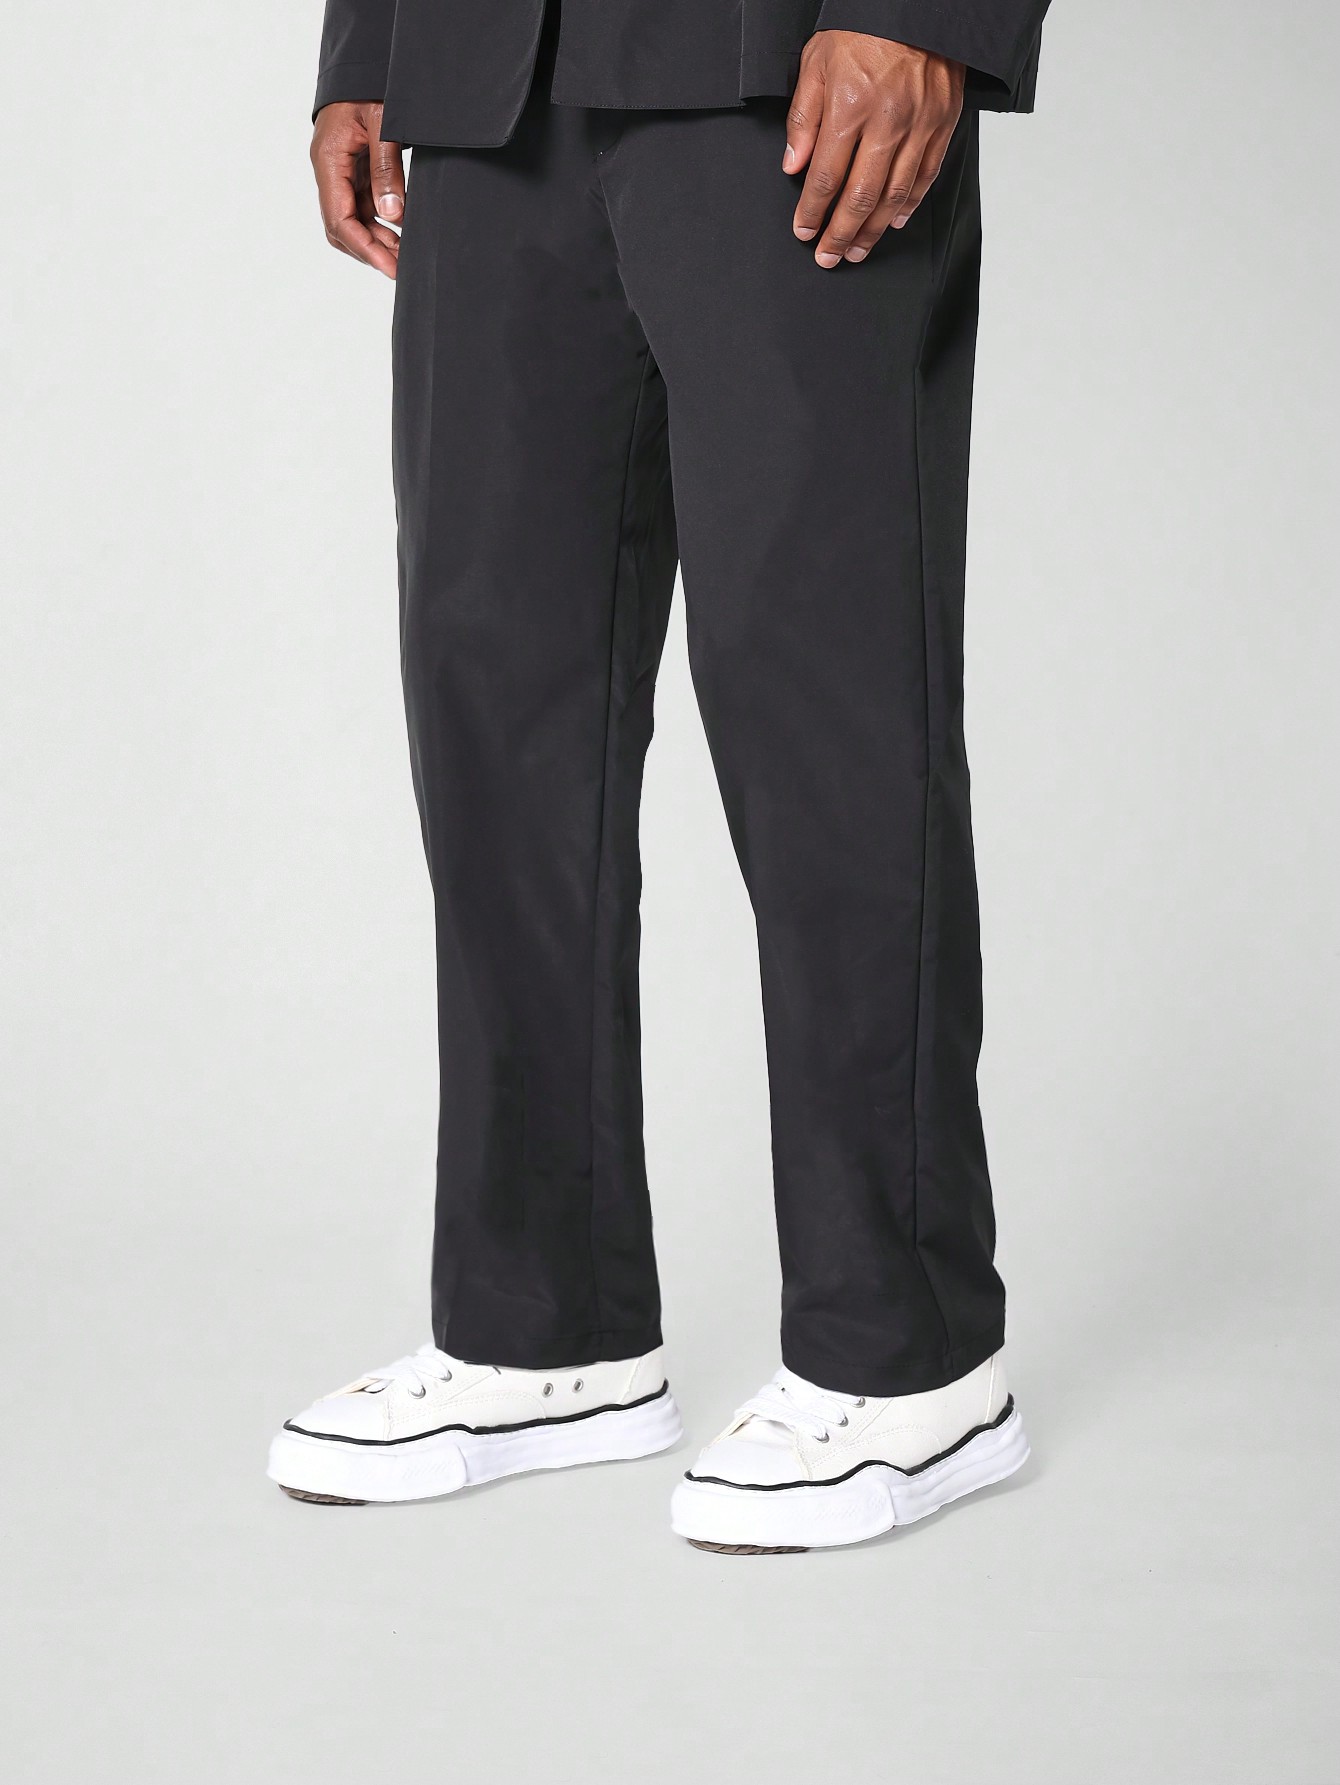 SUMWON Нейлоновые брюки для костюма, черный multi functional s type trouser rack stainless steel multi iayer trouser rack traceless adult trouser hanger